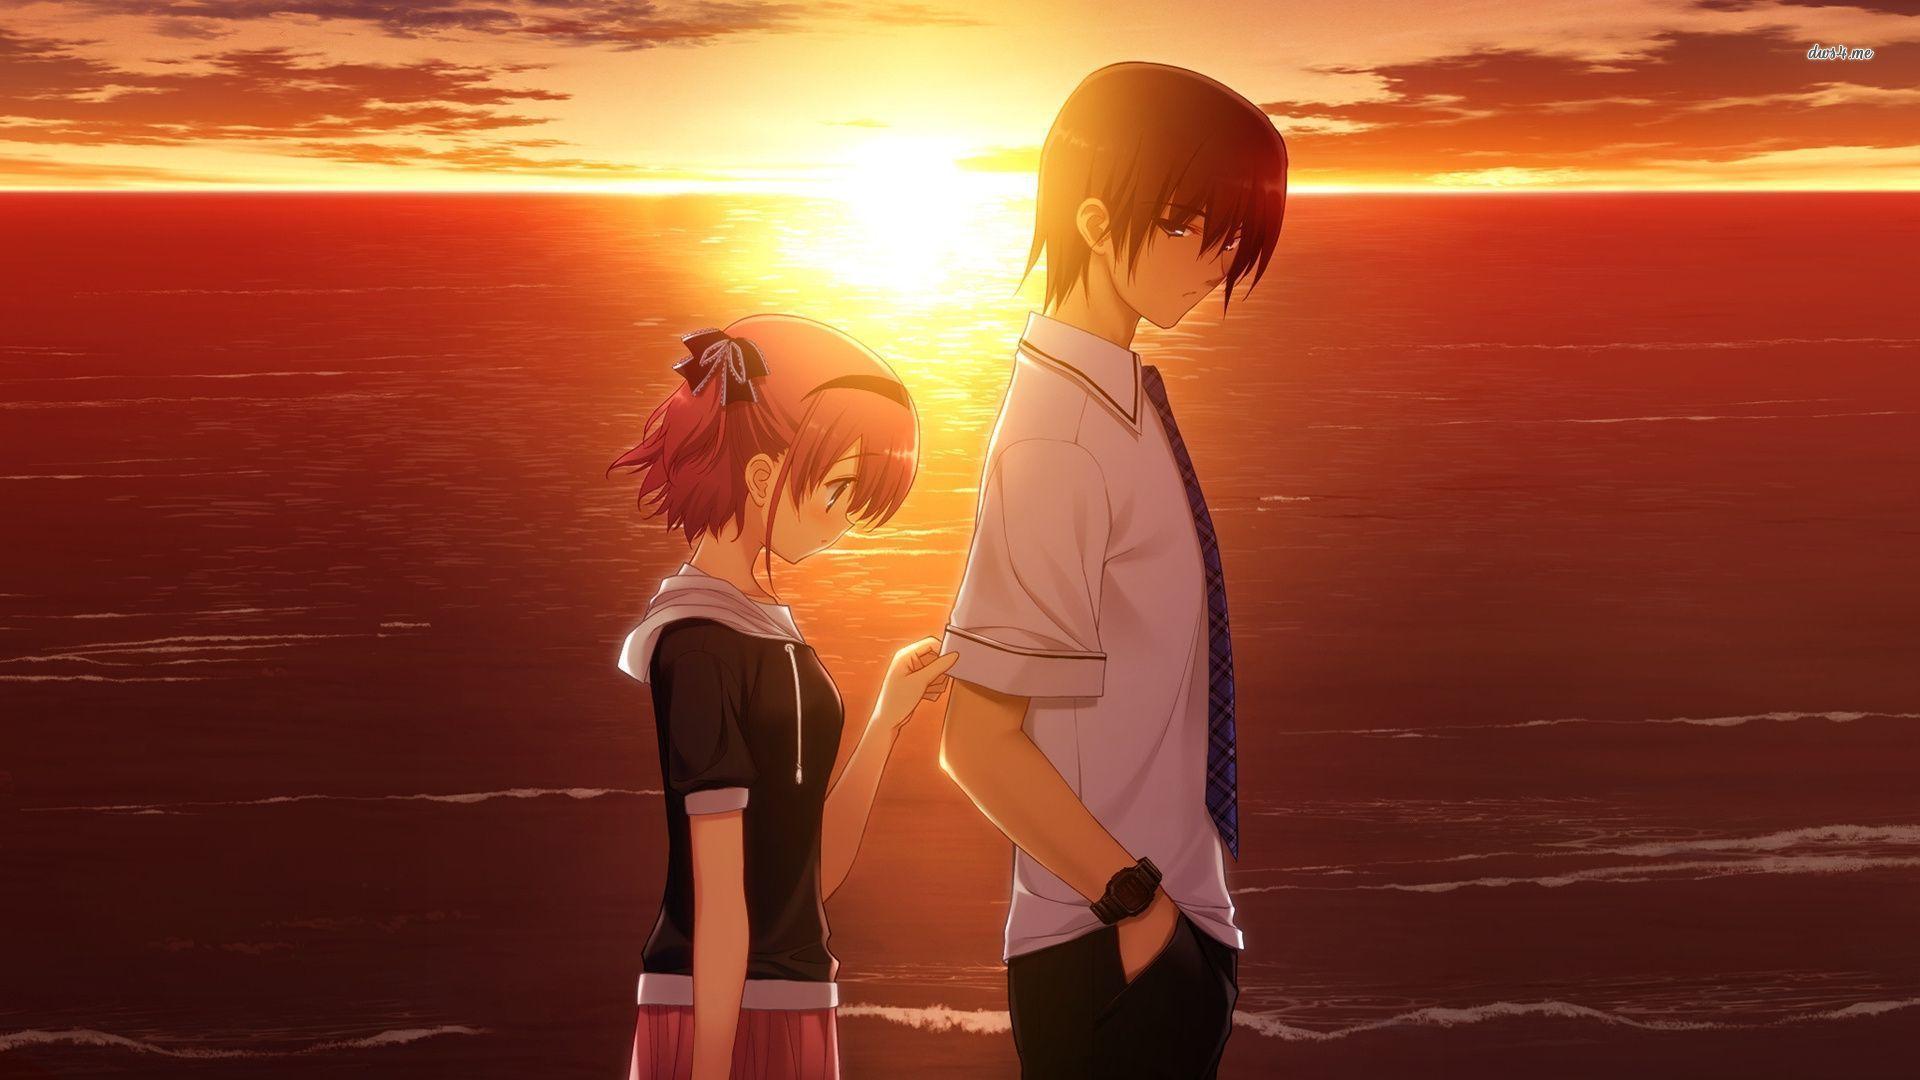 1920x1080 Sad couple in the Sunset hình nền - Hình nền anime